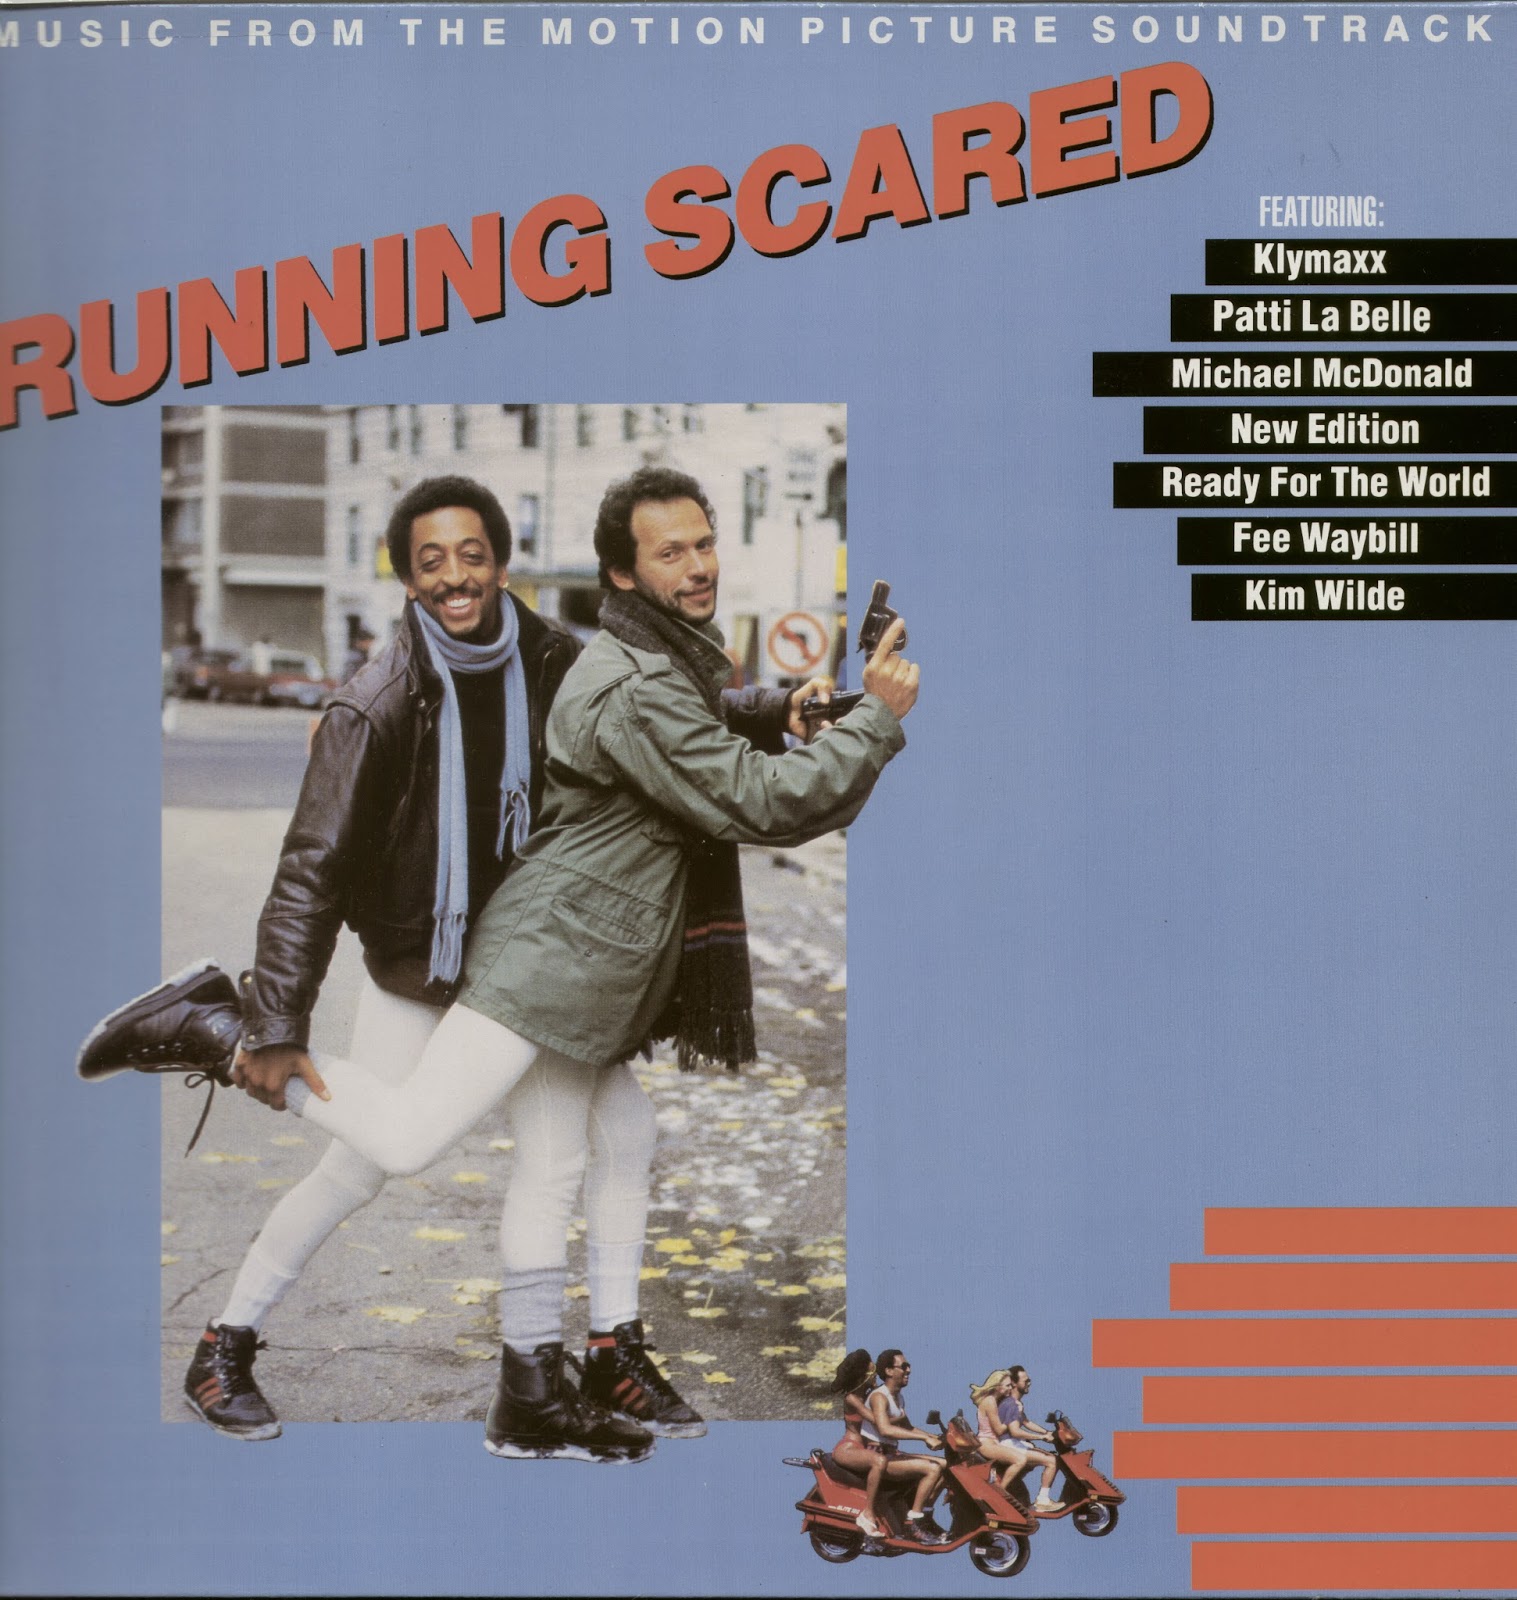 Runner soundtrack. Беги без оглядки / Running scared (1986) обложки. Klymaxx 1986 Klymaxx. Саундтреки купить.